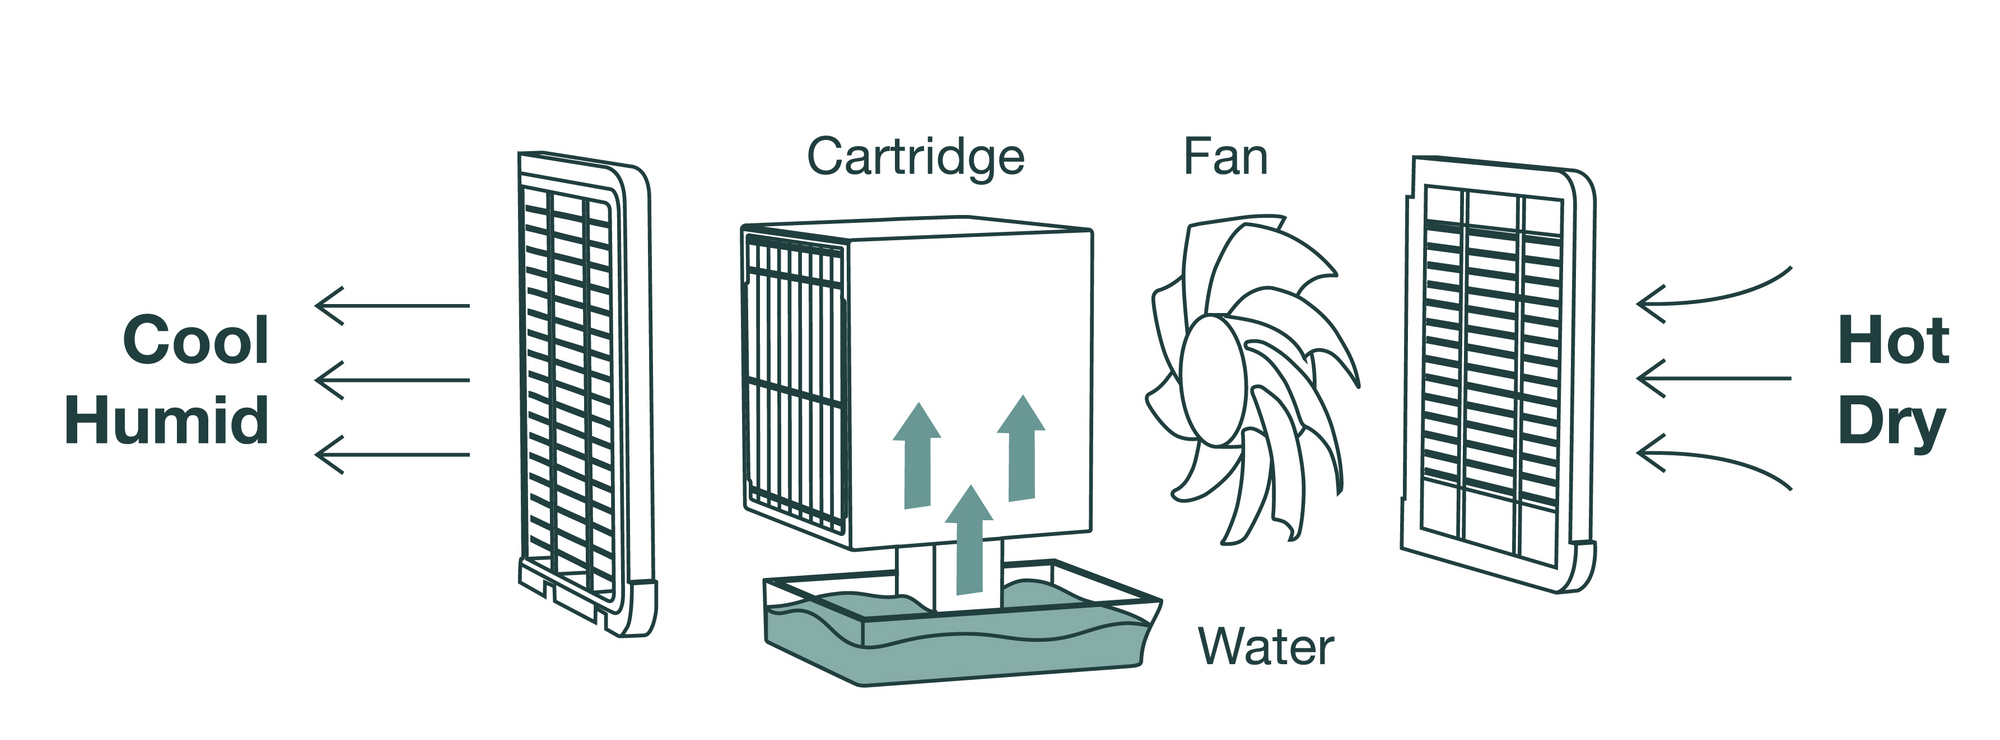 Evaporative Cooler System Process Illustration diagram